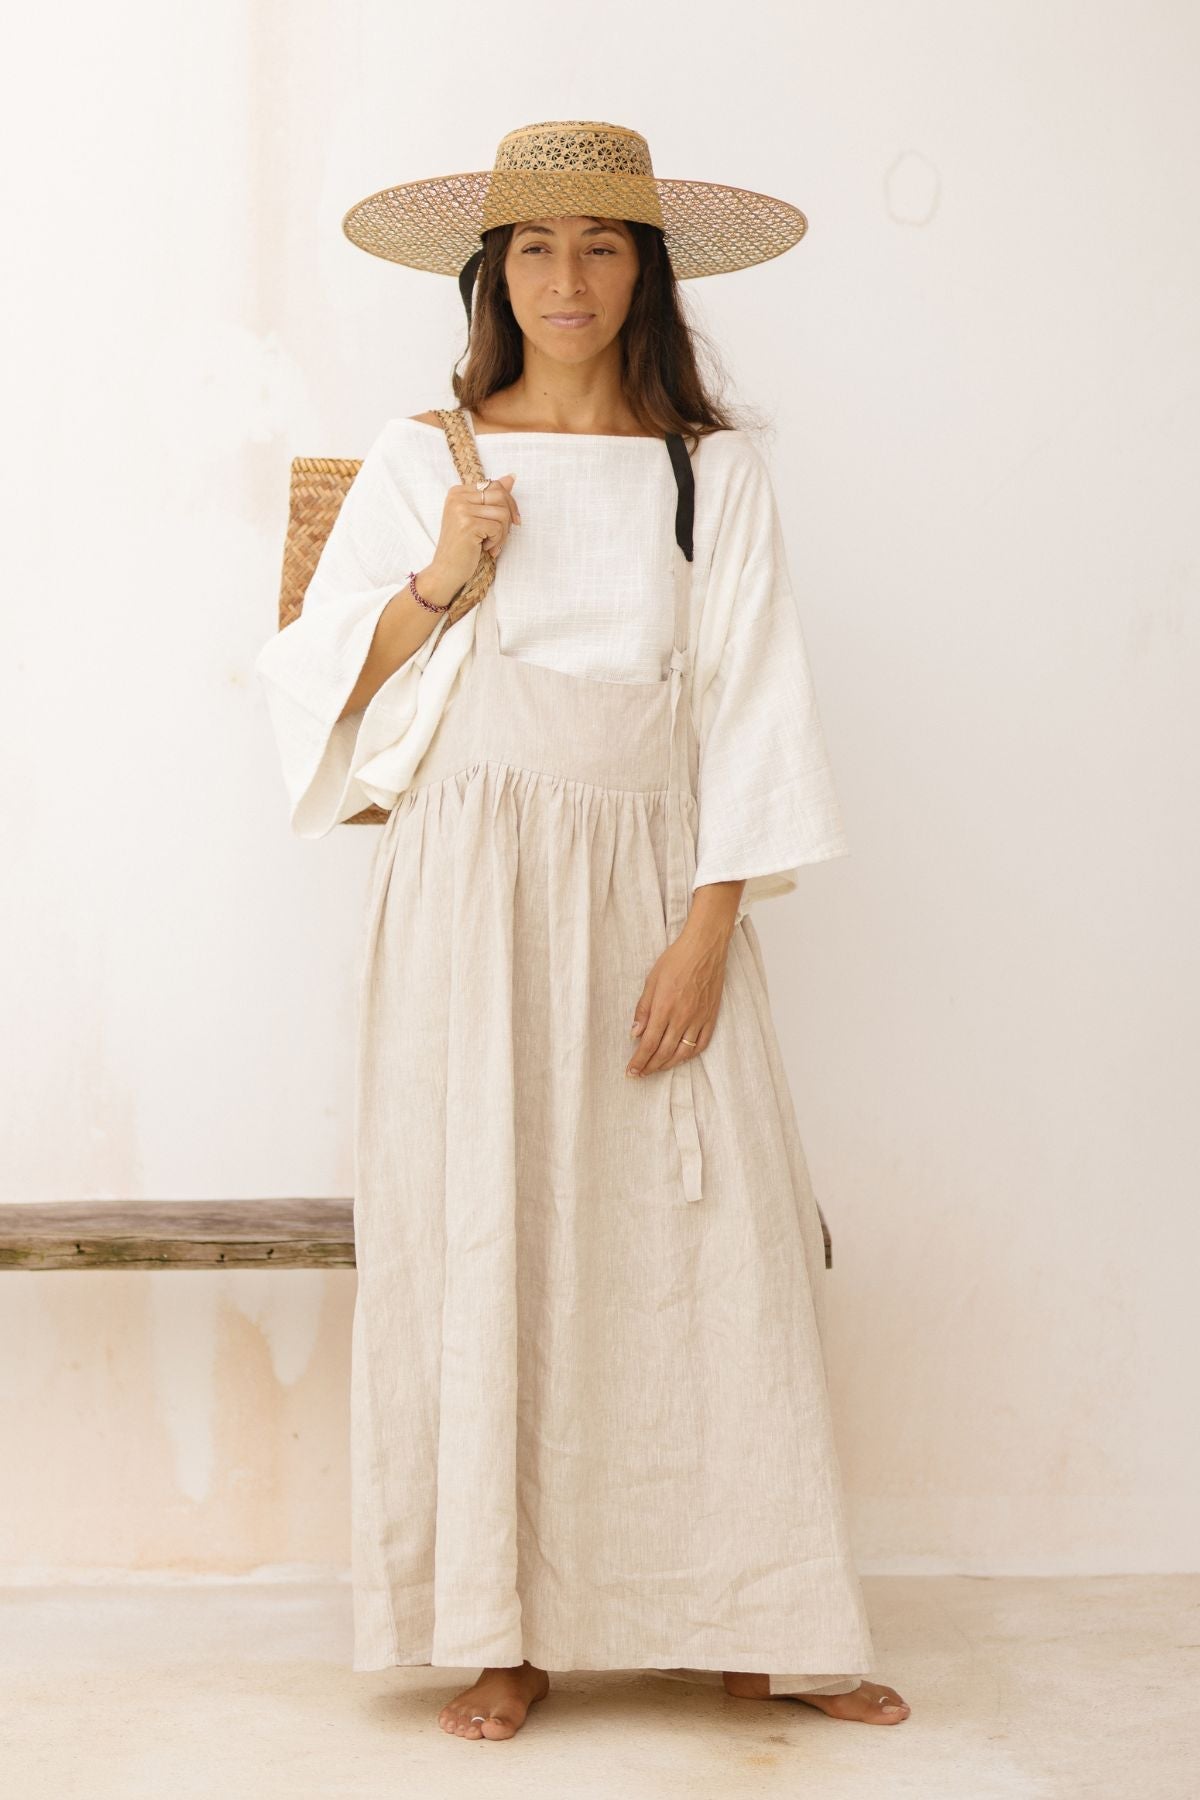 Myrah Penaloza Wholesale May May Overall Skirt Spirit Top Linen